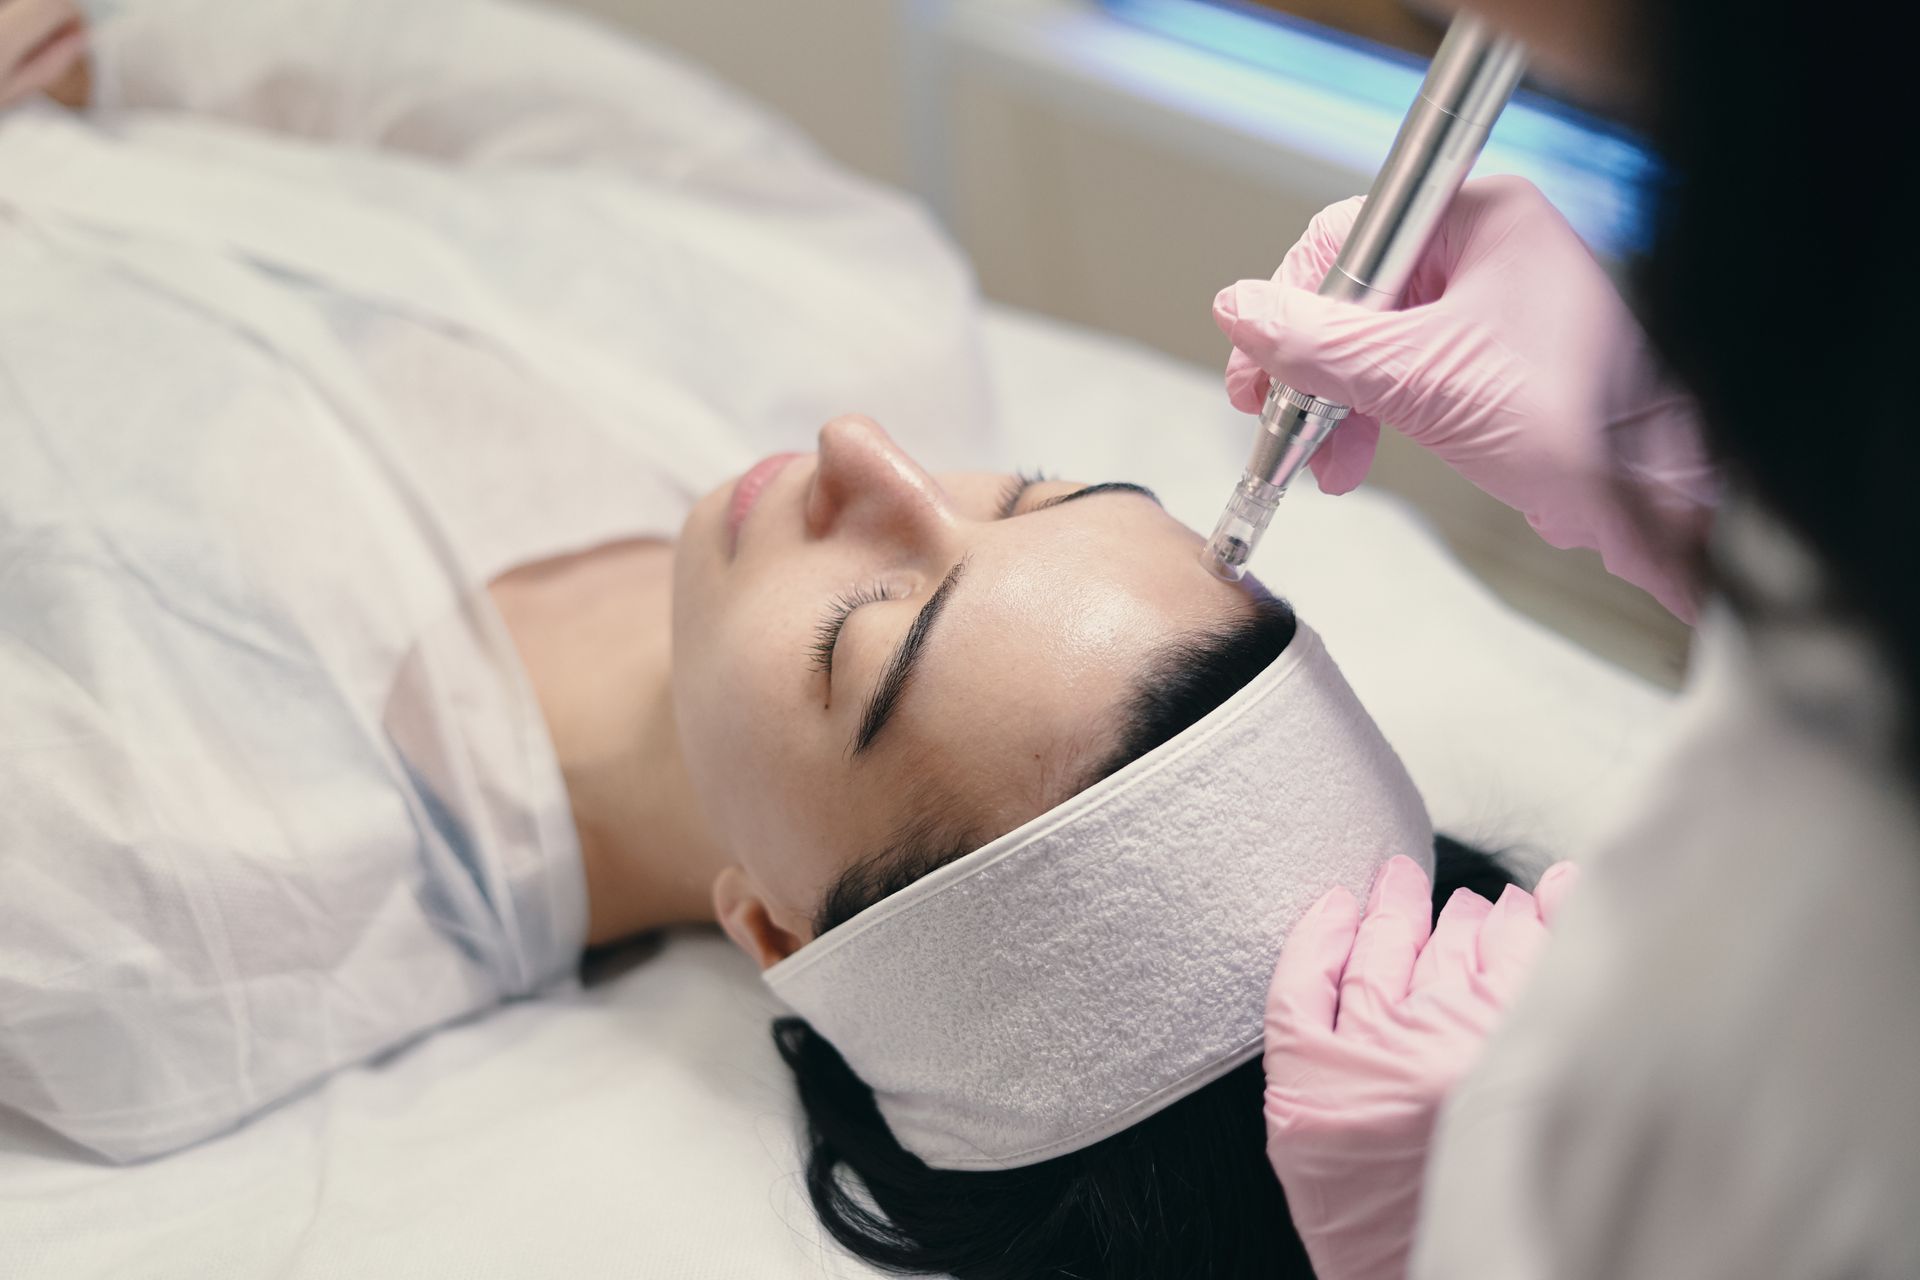 Microneedling facial rejuvenation treatment